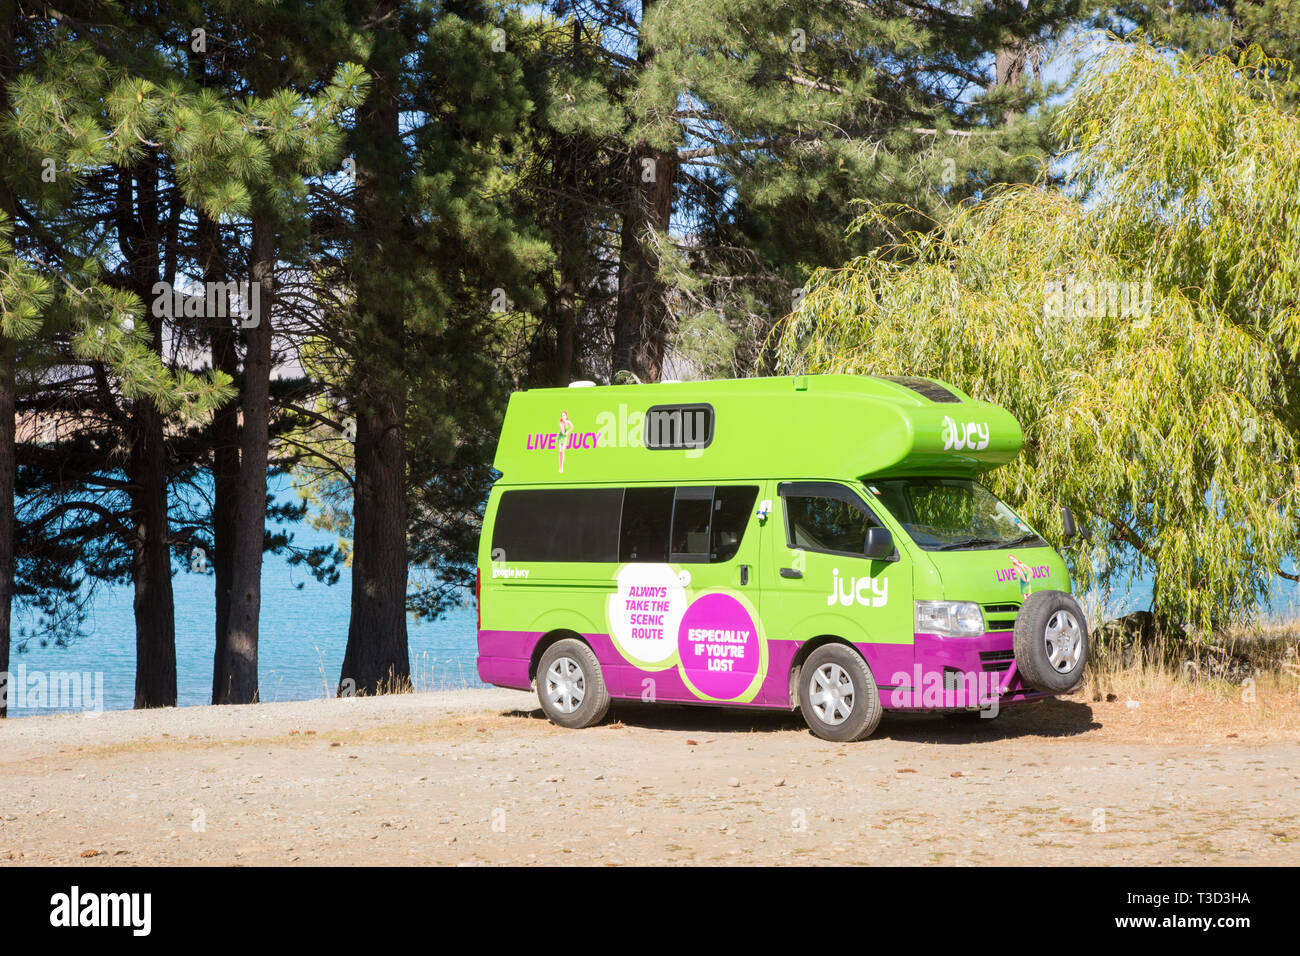 Live Jucy Wohnmobil geparkt, Neuseeland Stockfoto